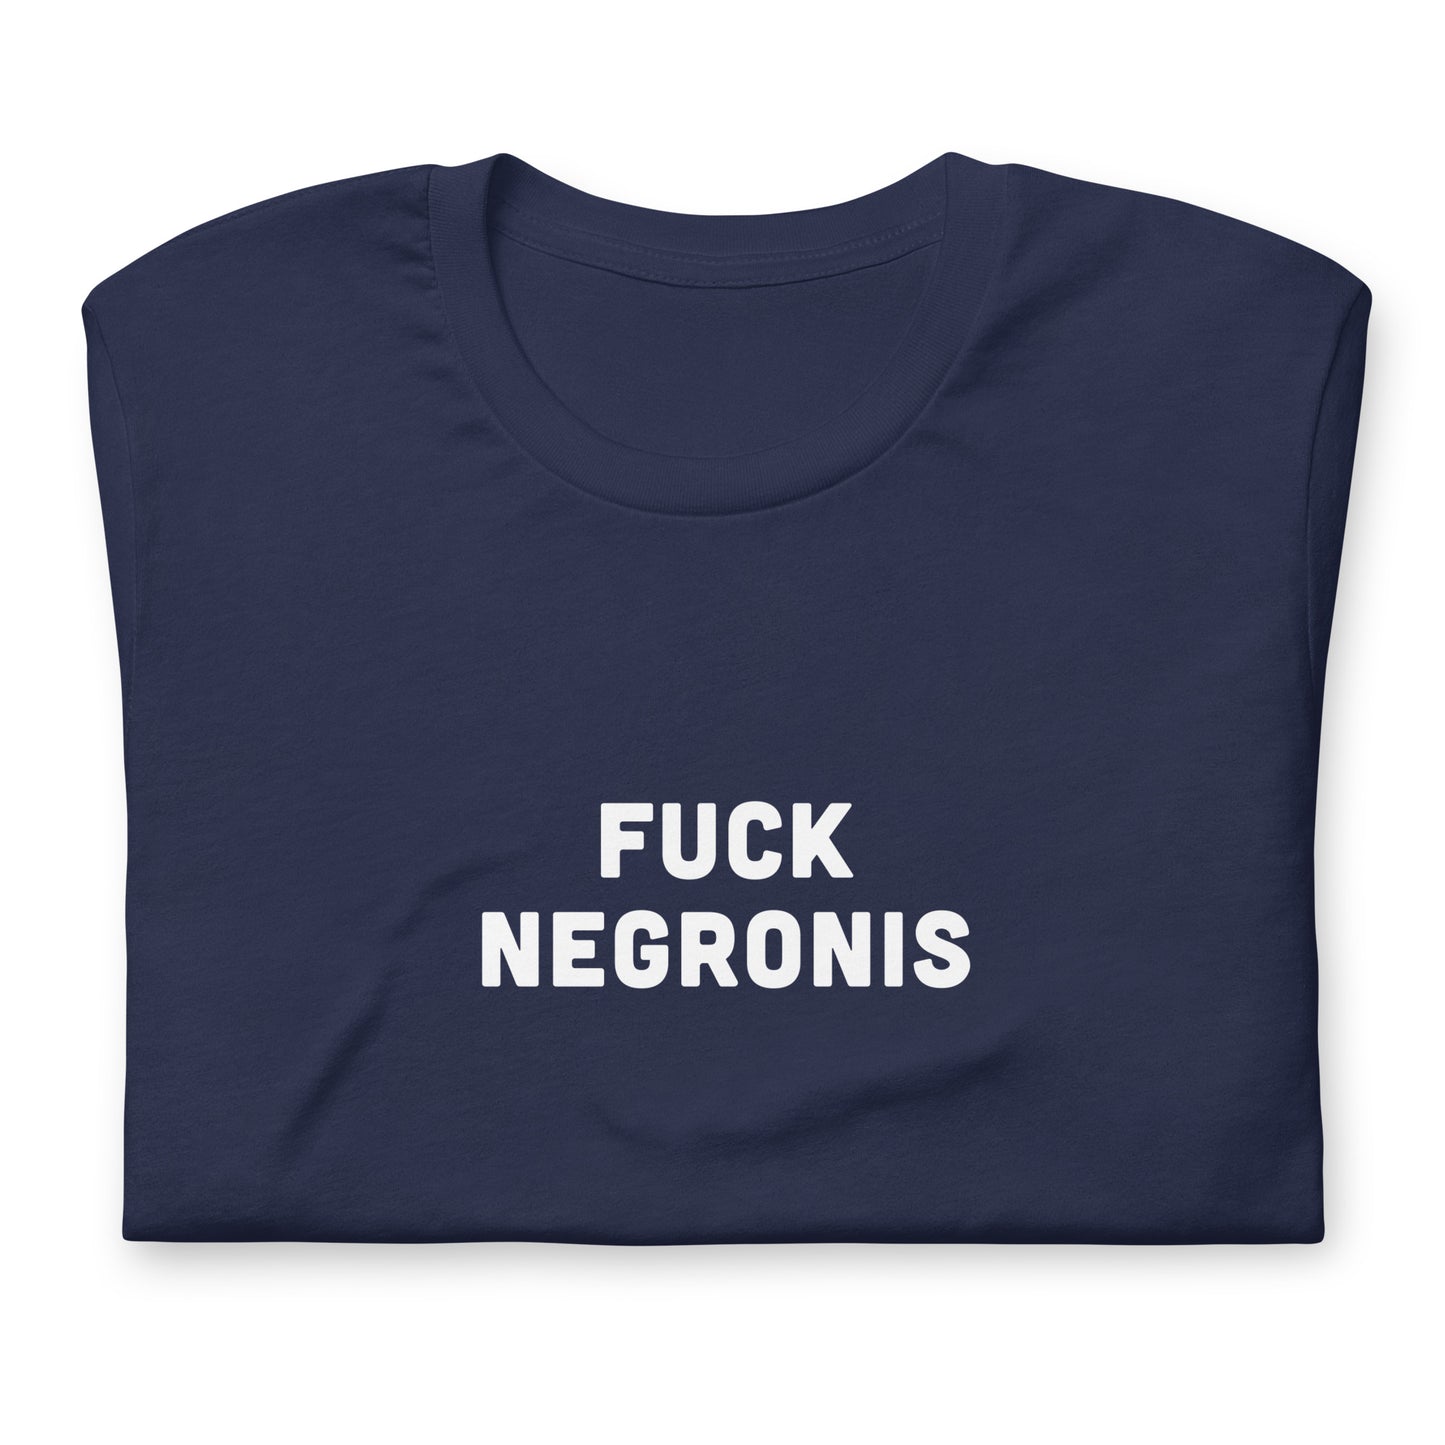 Fuck Negronis T-Shirt Size XL Color Black